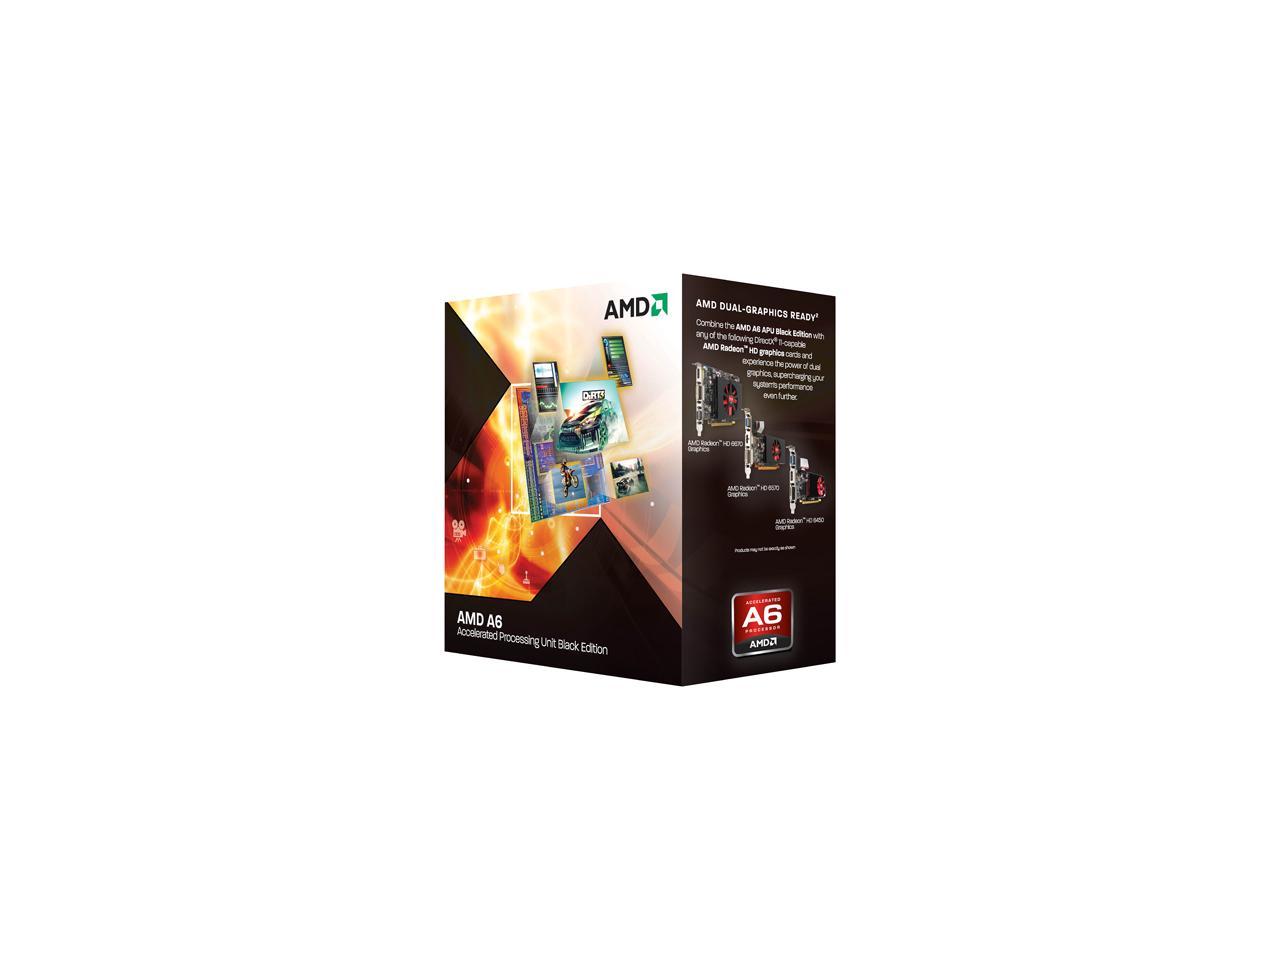 AMD A6-3670K Unlocked Llano Quad-Core 2.7 GHz Socket FM1 100W AD3670WNGXBOX Desktop APU (CPU + GPU) with DirectX 11 Graphic AMD Radeon HD 6530D